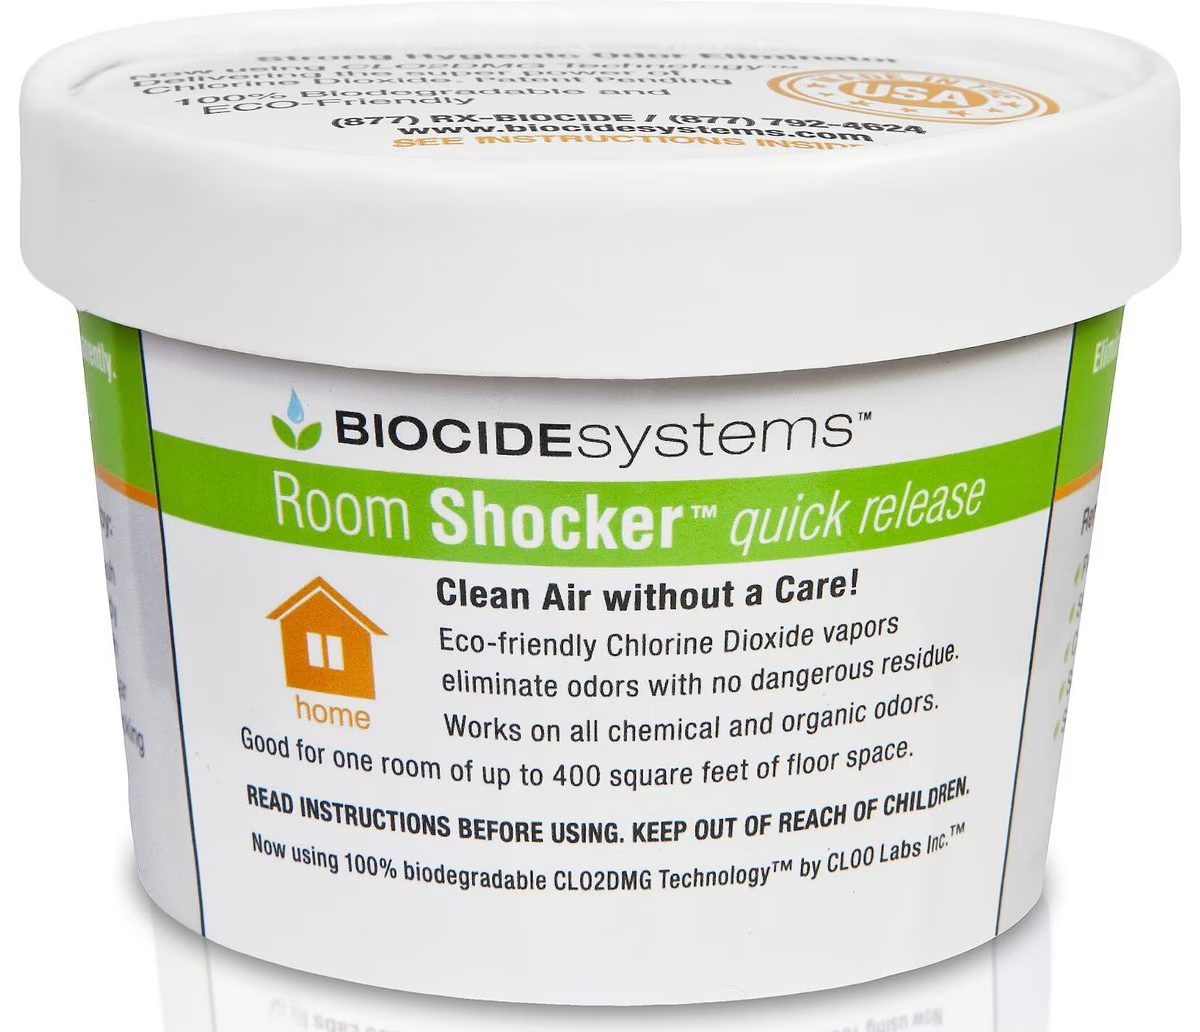 Room Shocker Quick Release Odor Eliminating Vapor